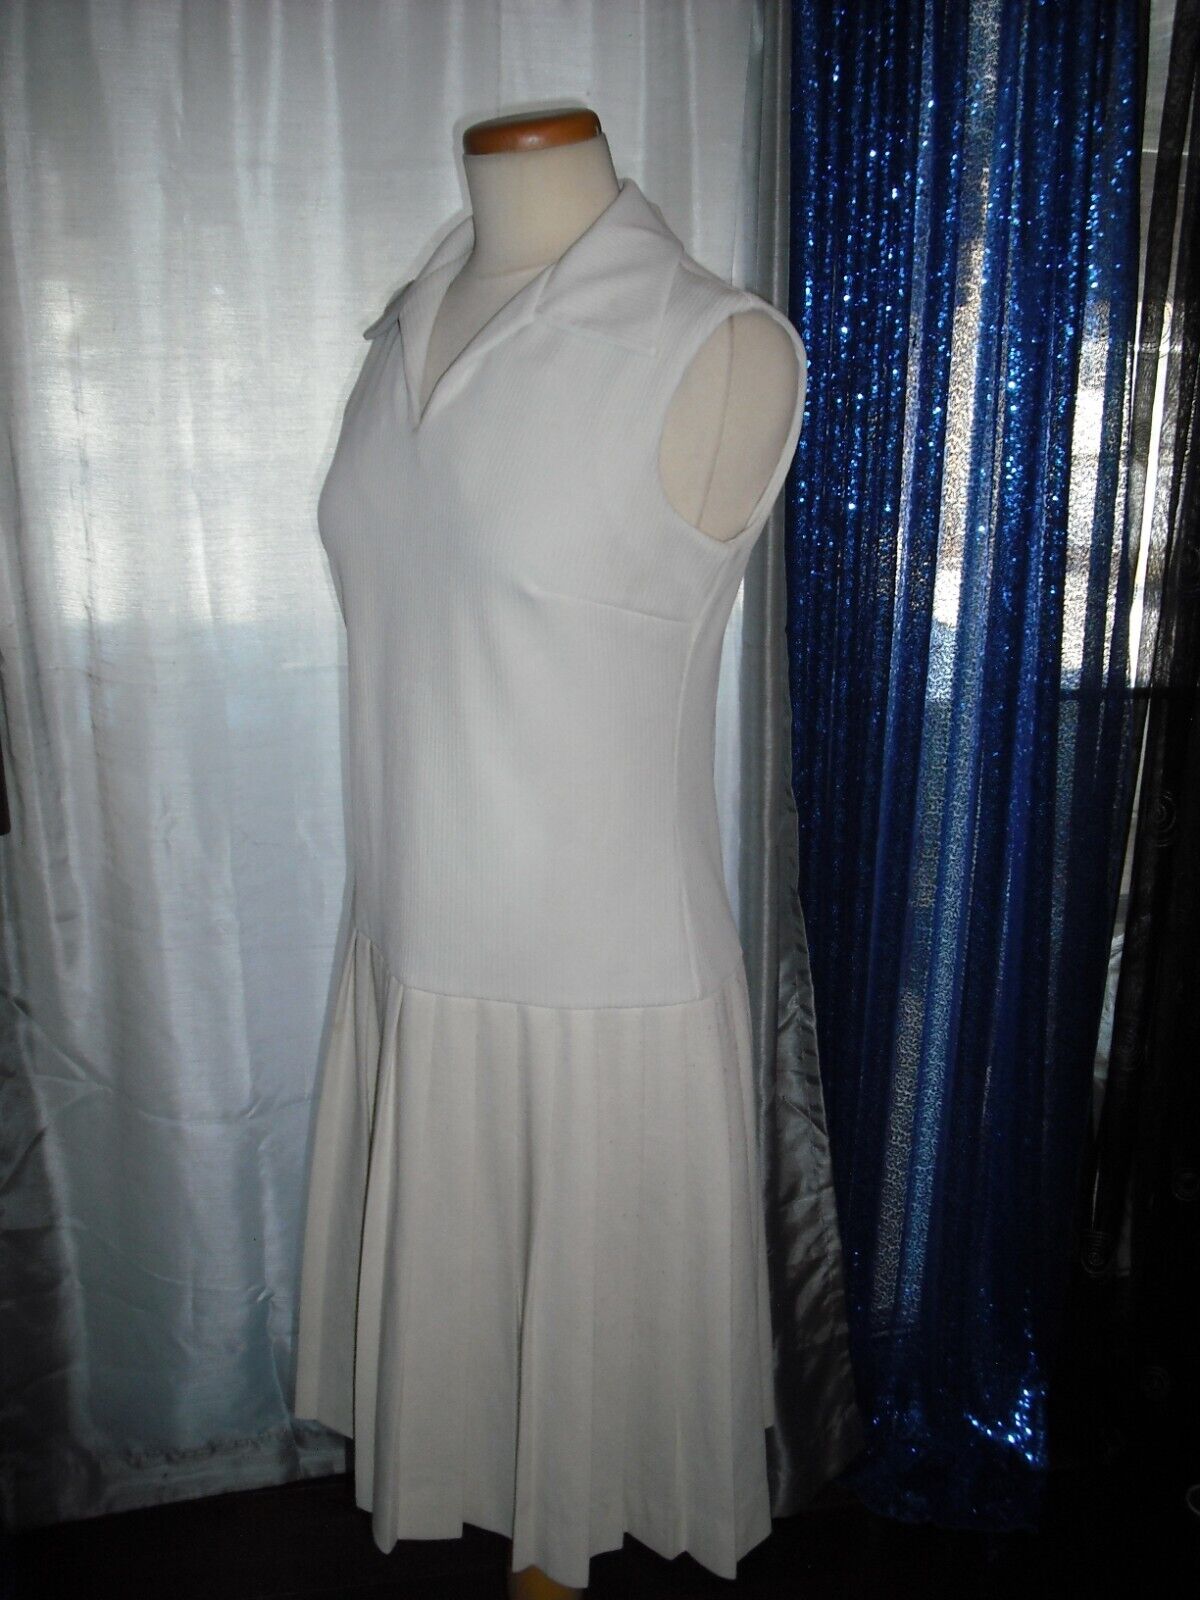 Doris Day Personally Owned & Worn White Sleeveless Dress From Stylist Guilaroff